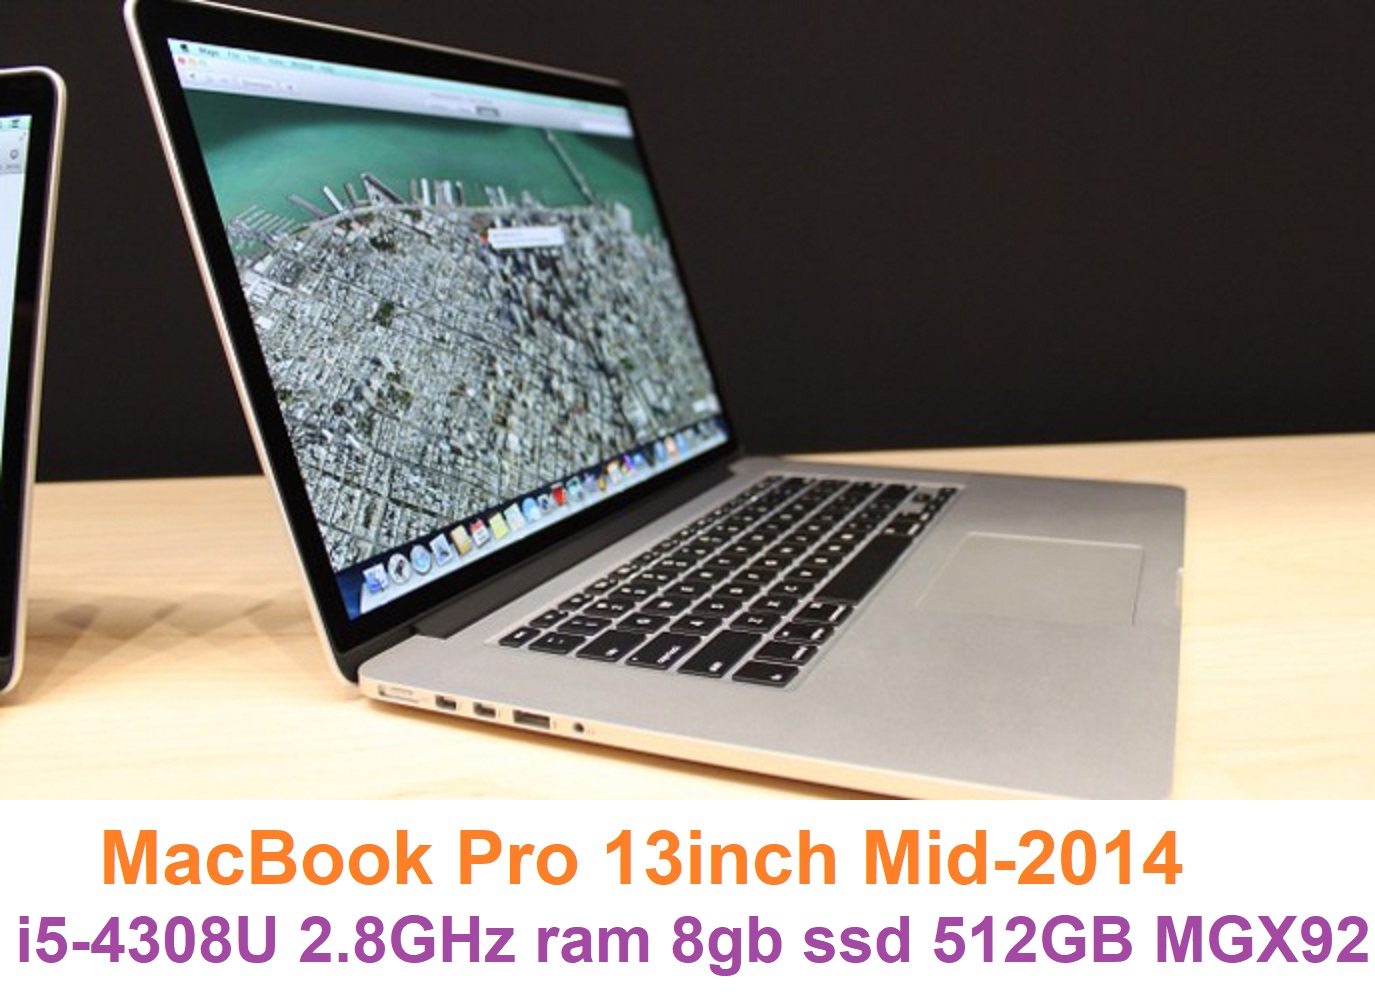 MacBook Pro 13inch Mid-2014 Core i5-4308U 2.8GHz ram 8gb ssd 512GB MGX92 A1502 EMC 2875 MacBookPro11,1